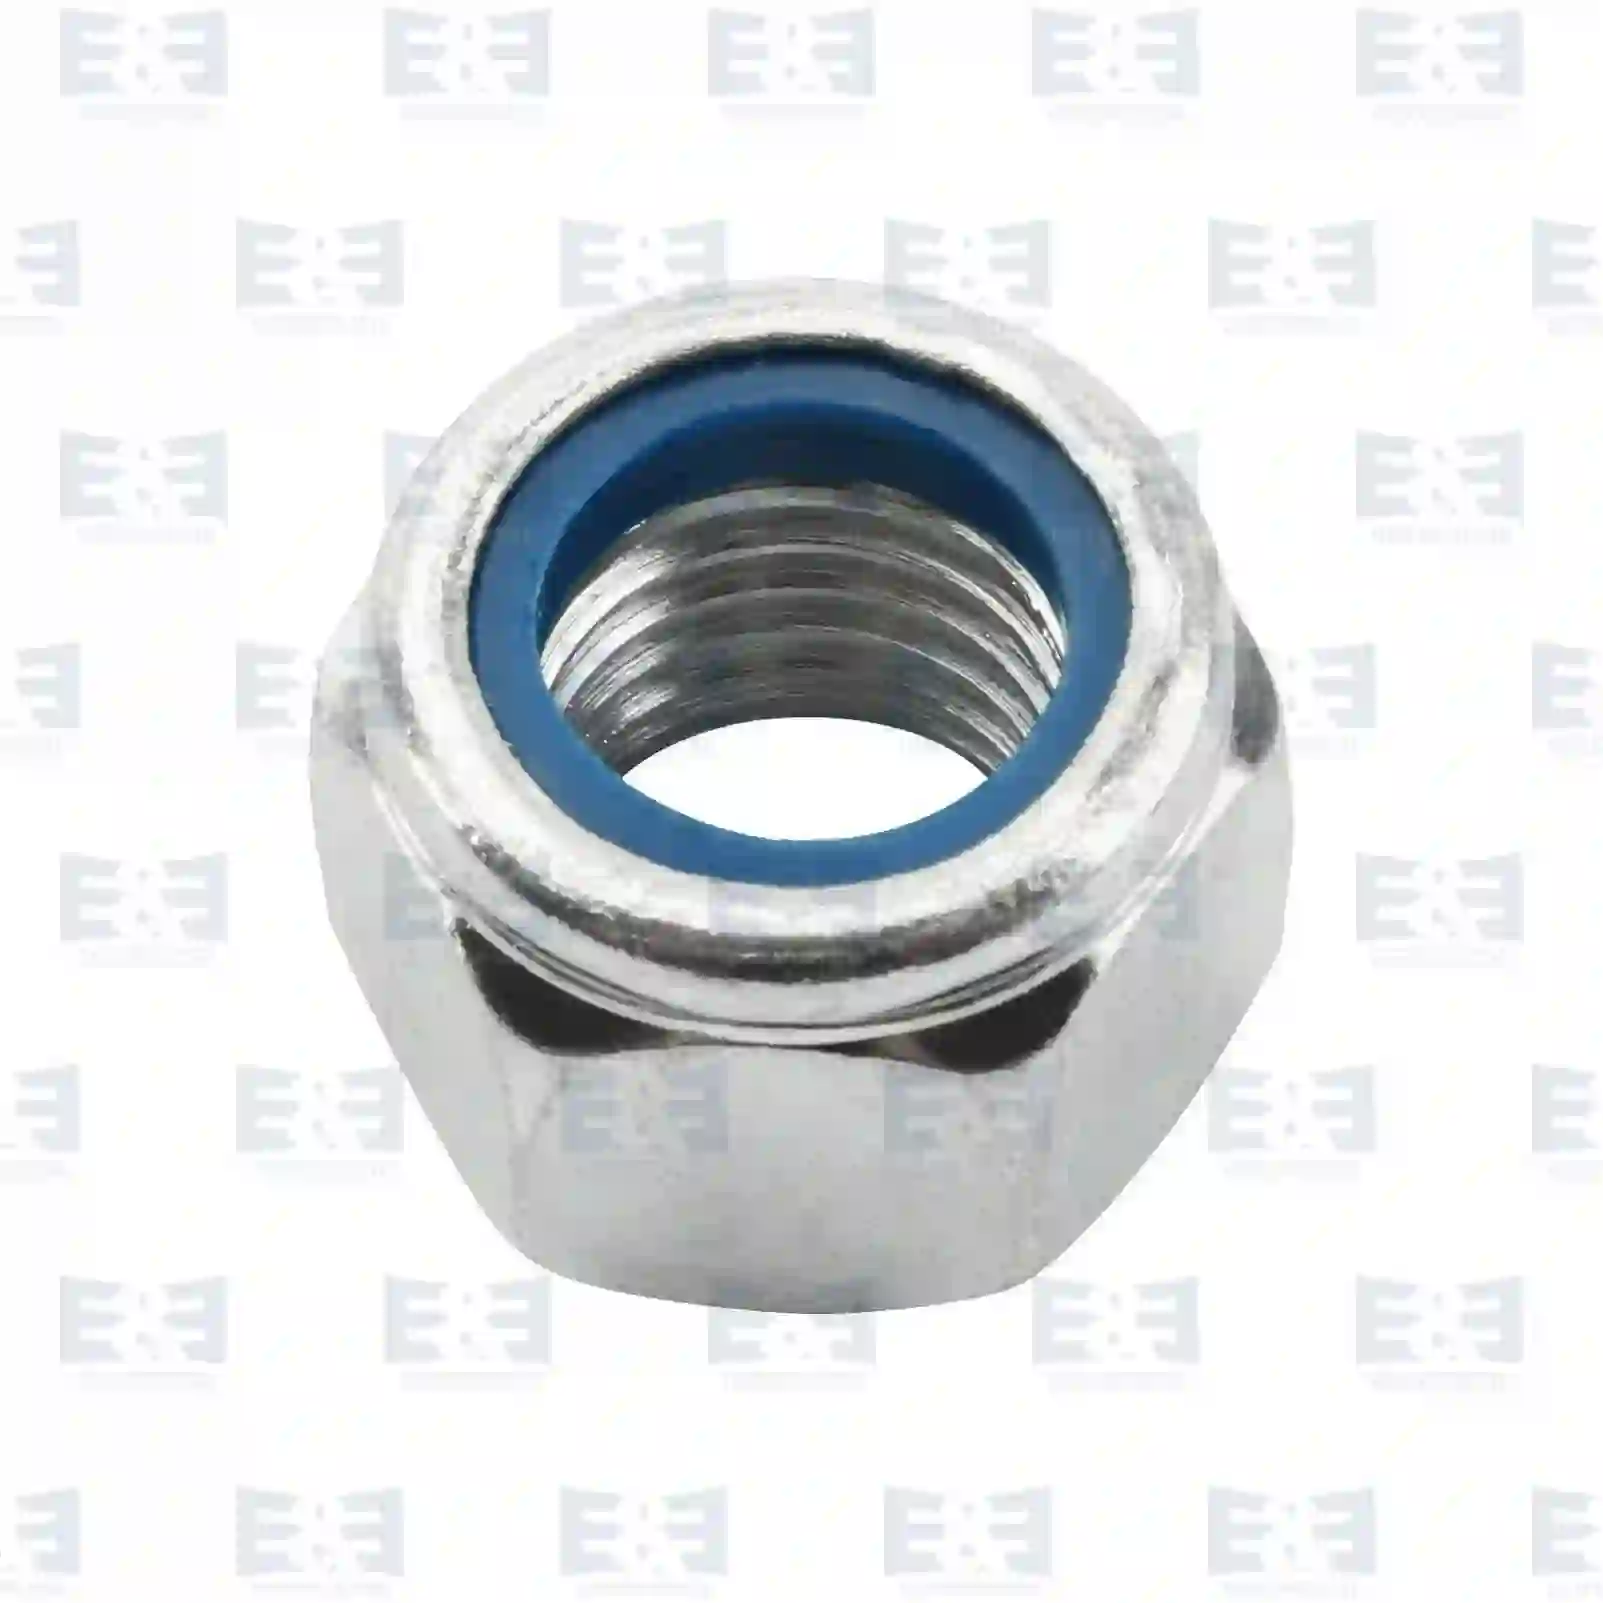  Lock nut || E&E Truck Spare Parts | Truck Spare Parts, Auotomotive Spare Parts